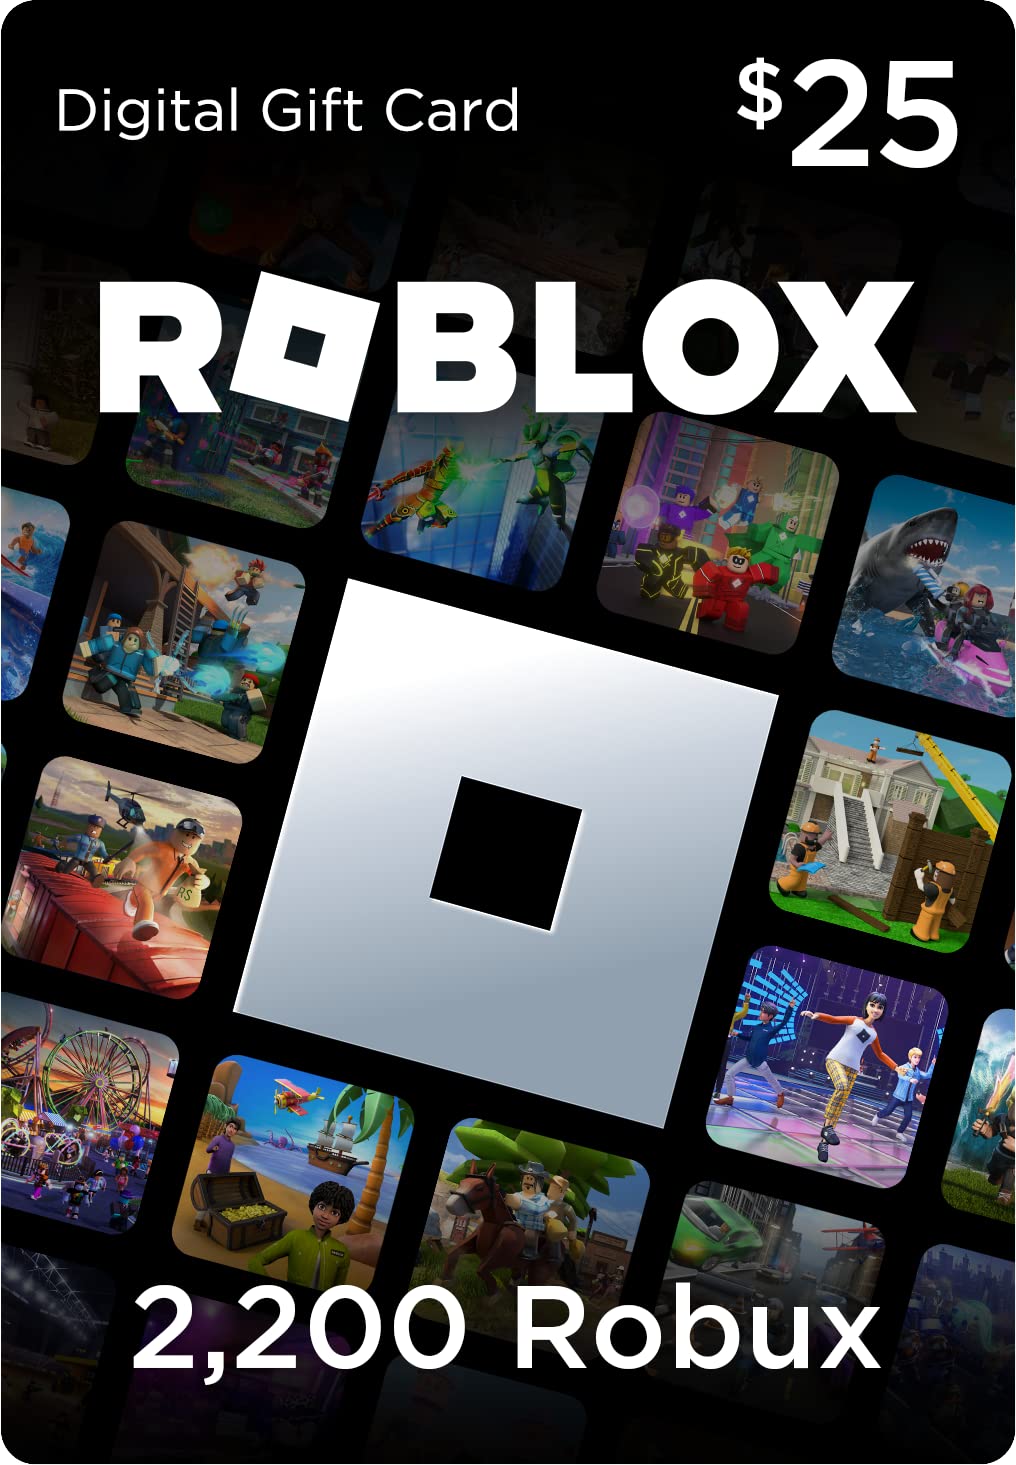 Roblox Digital Gift Card | 2,200 Robux